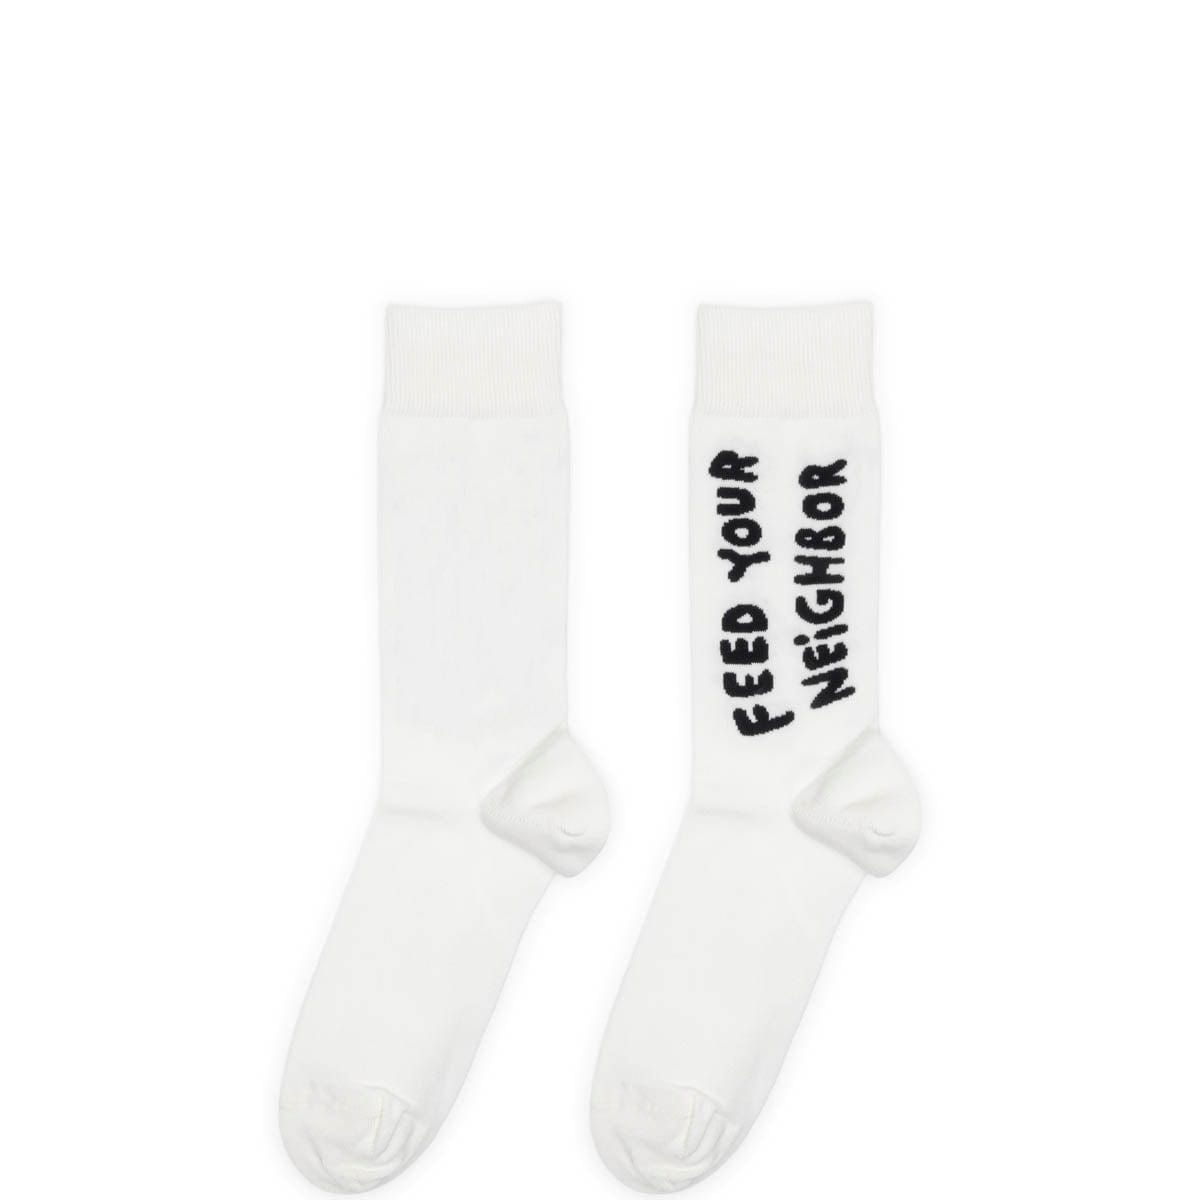 Sky High Farms Workwear Socks WHITE / L FEED YOUR NEIGHBOR SOCKS KNIT